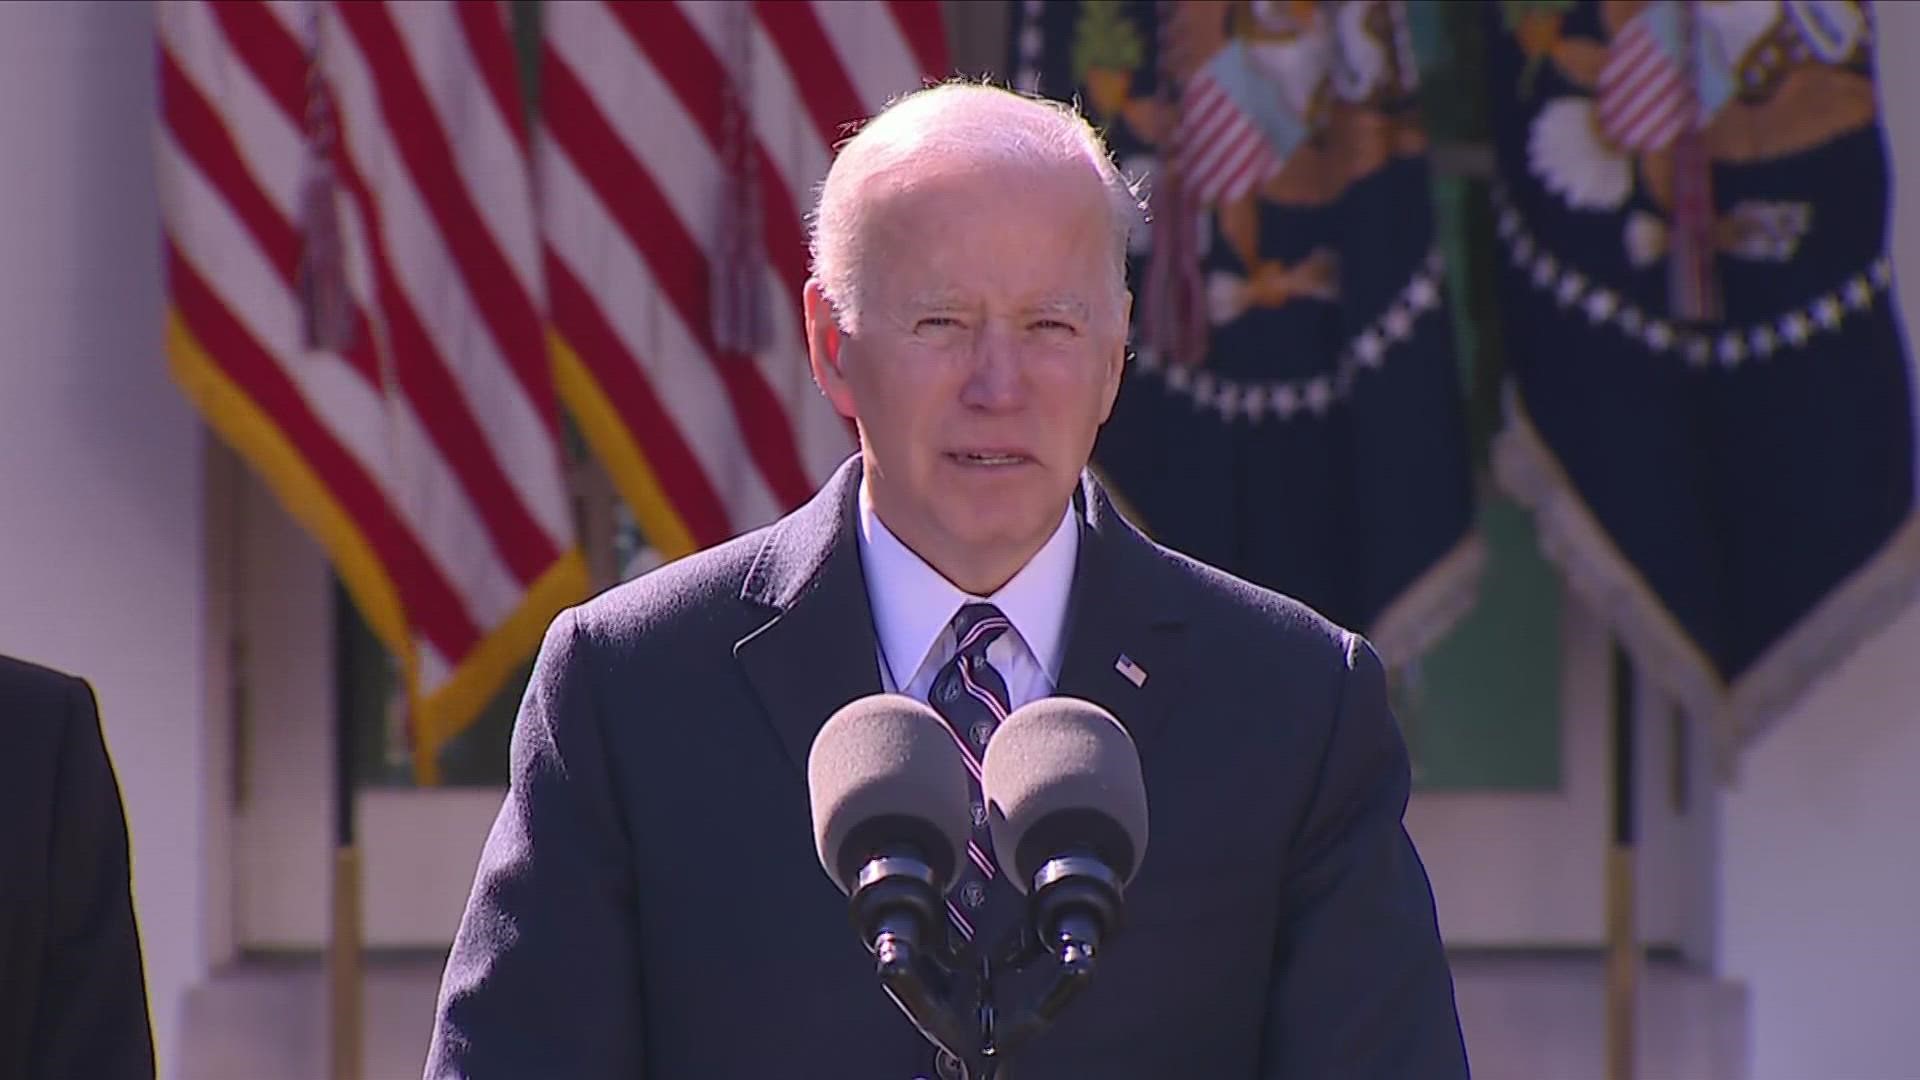 Biden spoke after signing the Emmett Till anti-lynching bill into law.